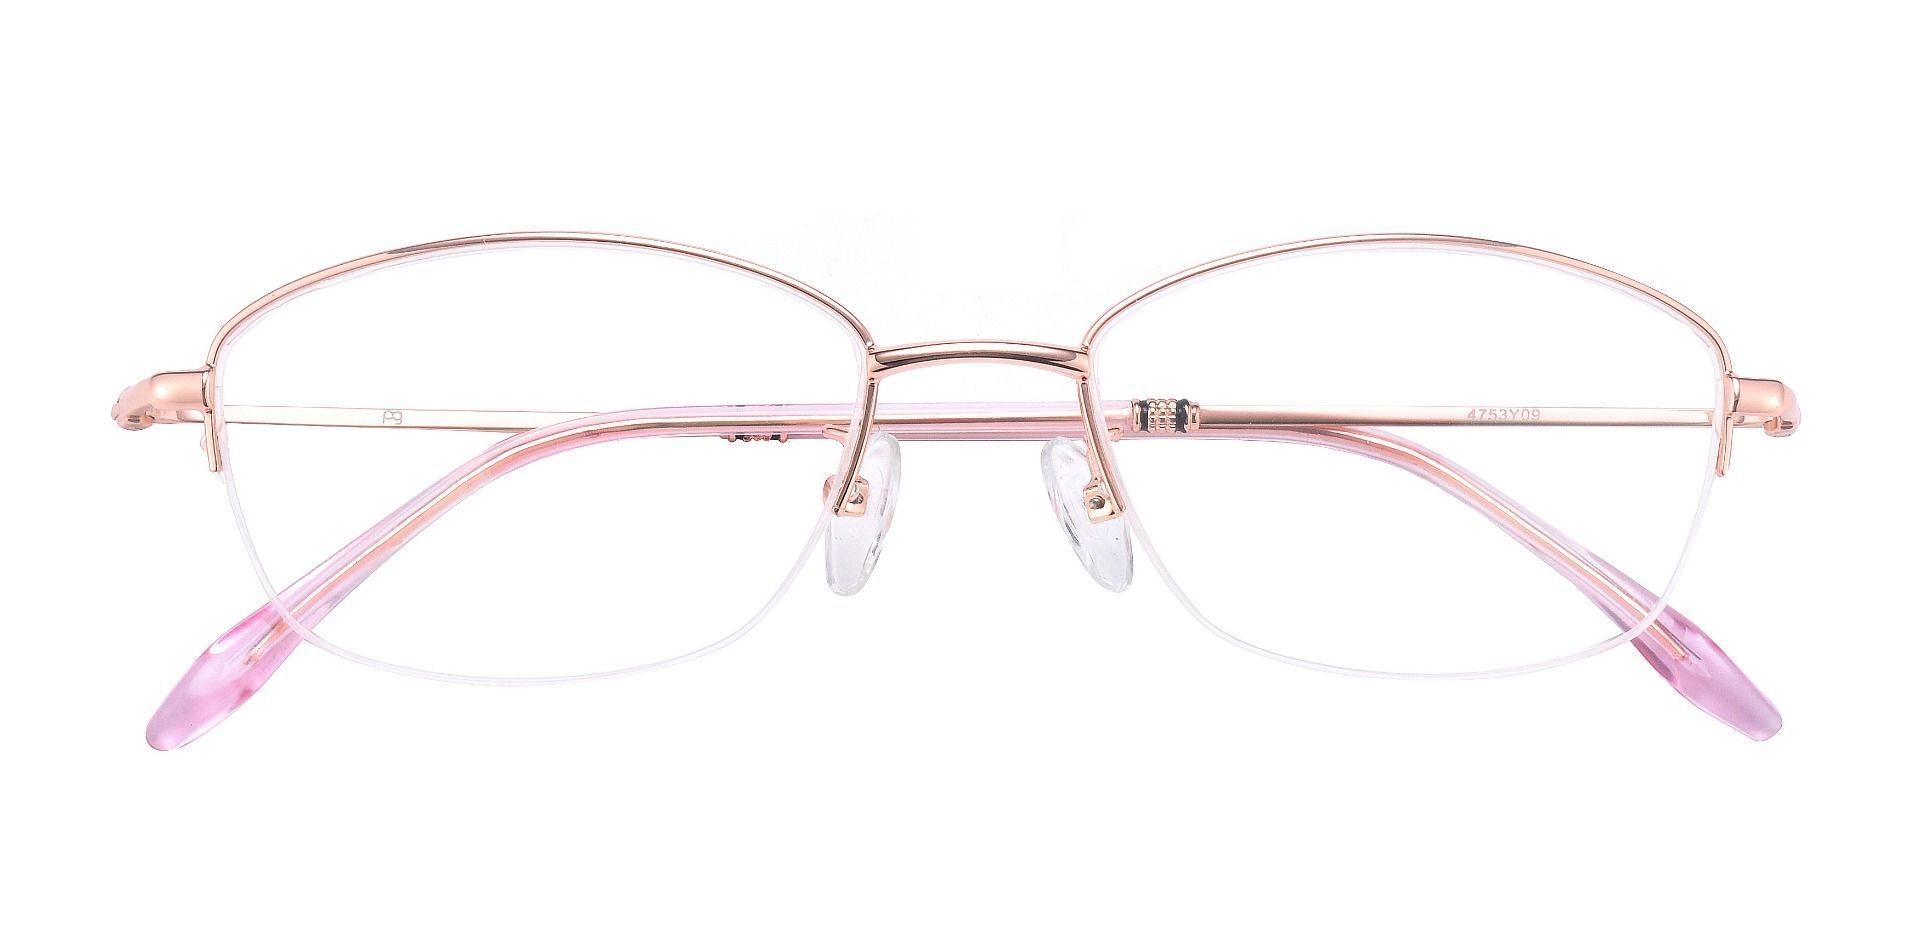 Mendoza Oval Lined Bifocal Glasses - Rose Gold